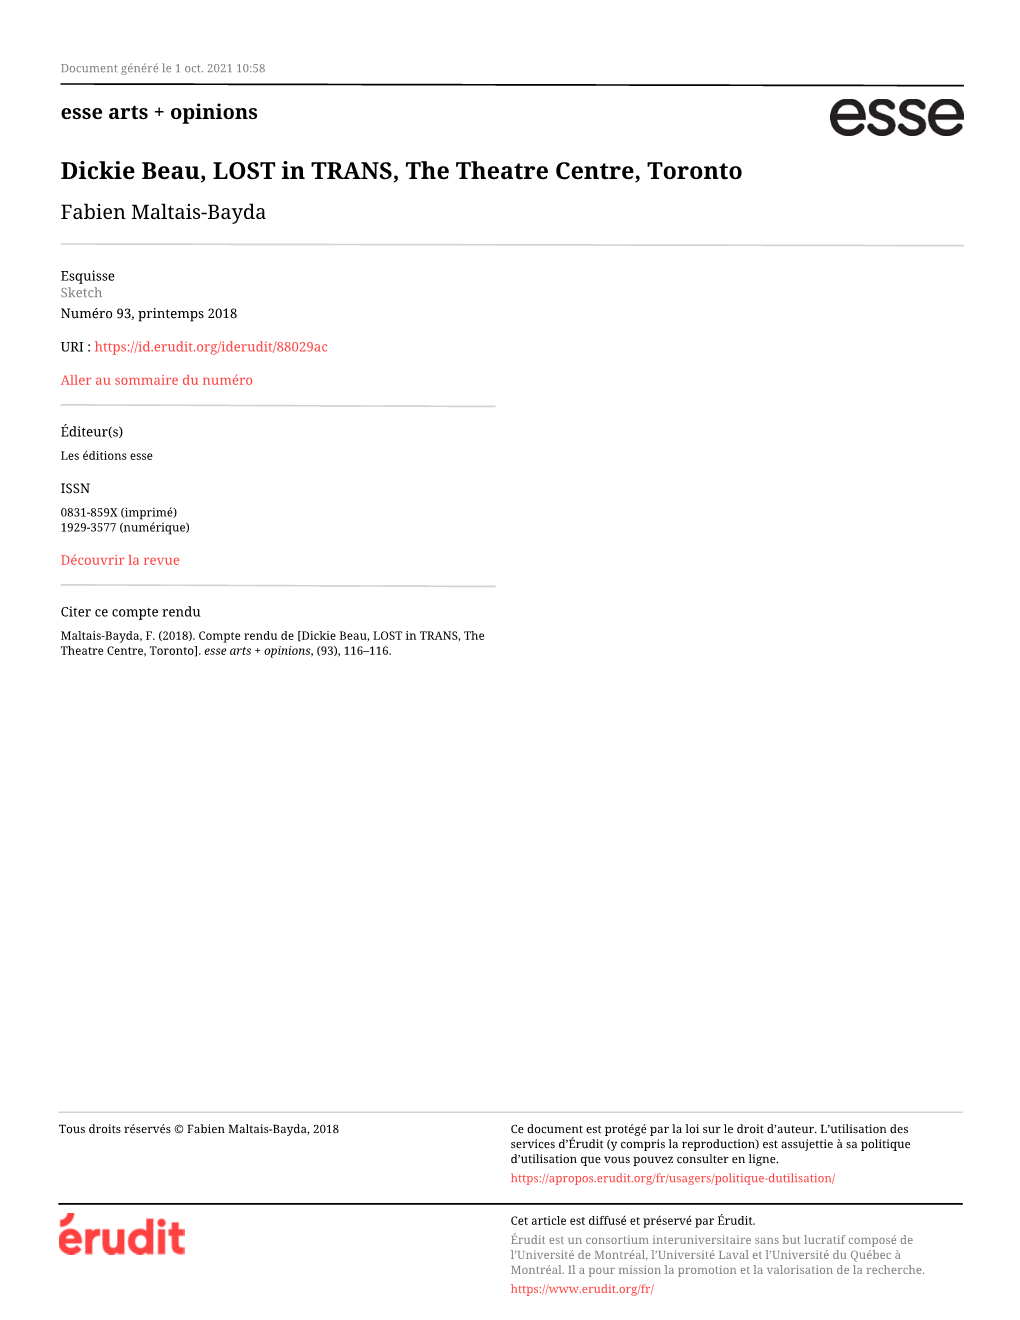 Dickie Beau, LOST in TRANS, the Theatre Centre, Toronto Fabien Maltais-Bayda